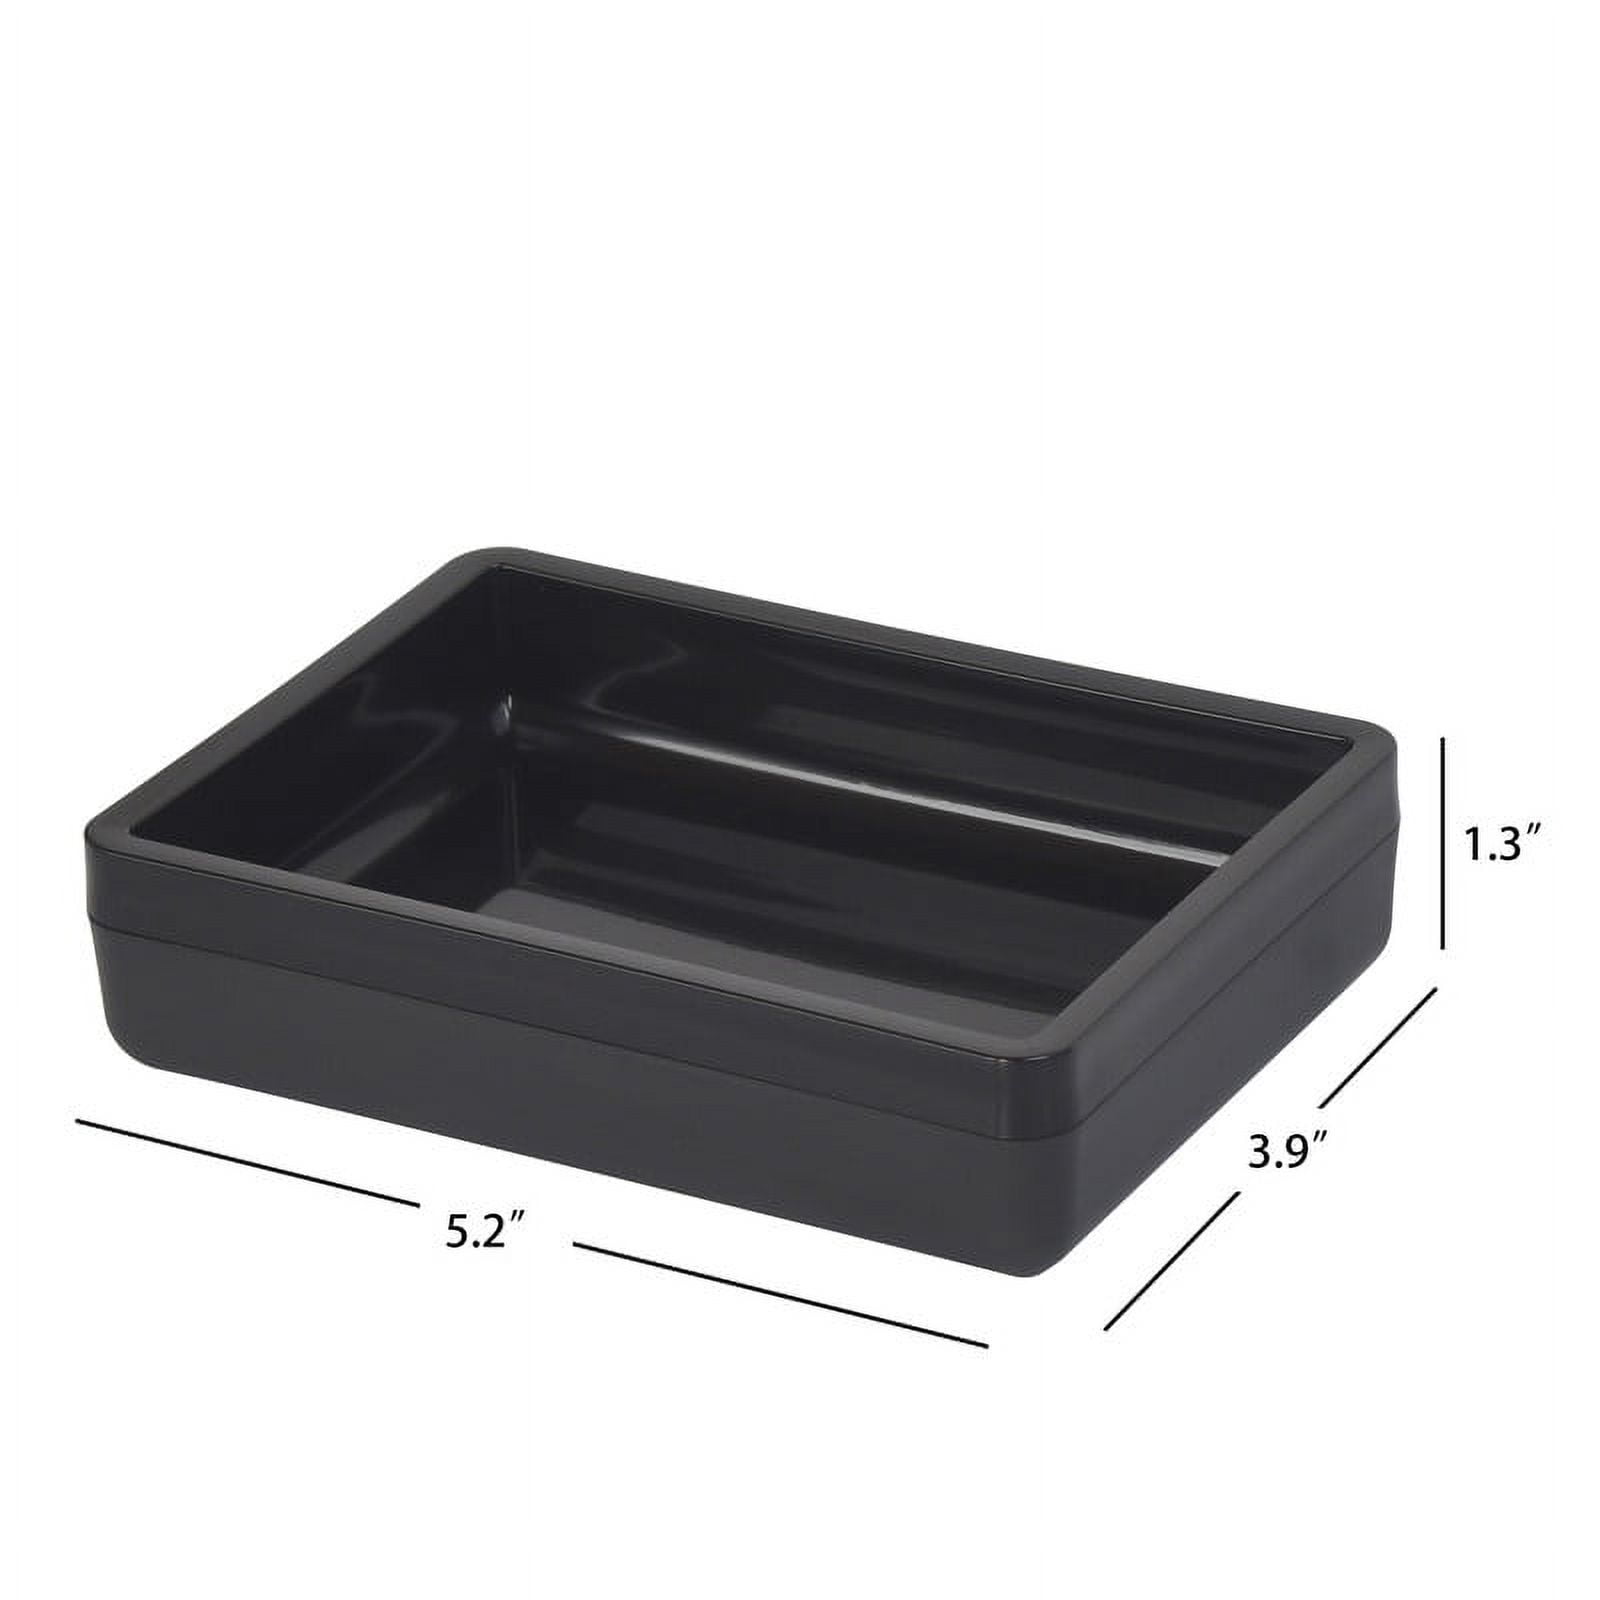 Plant-Based Soap Dish Tray Black